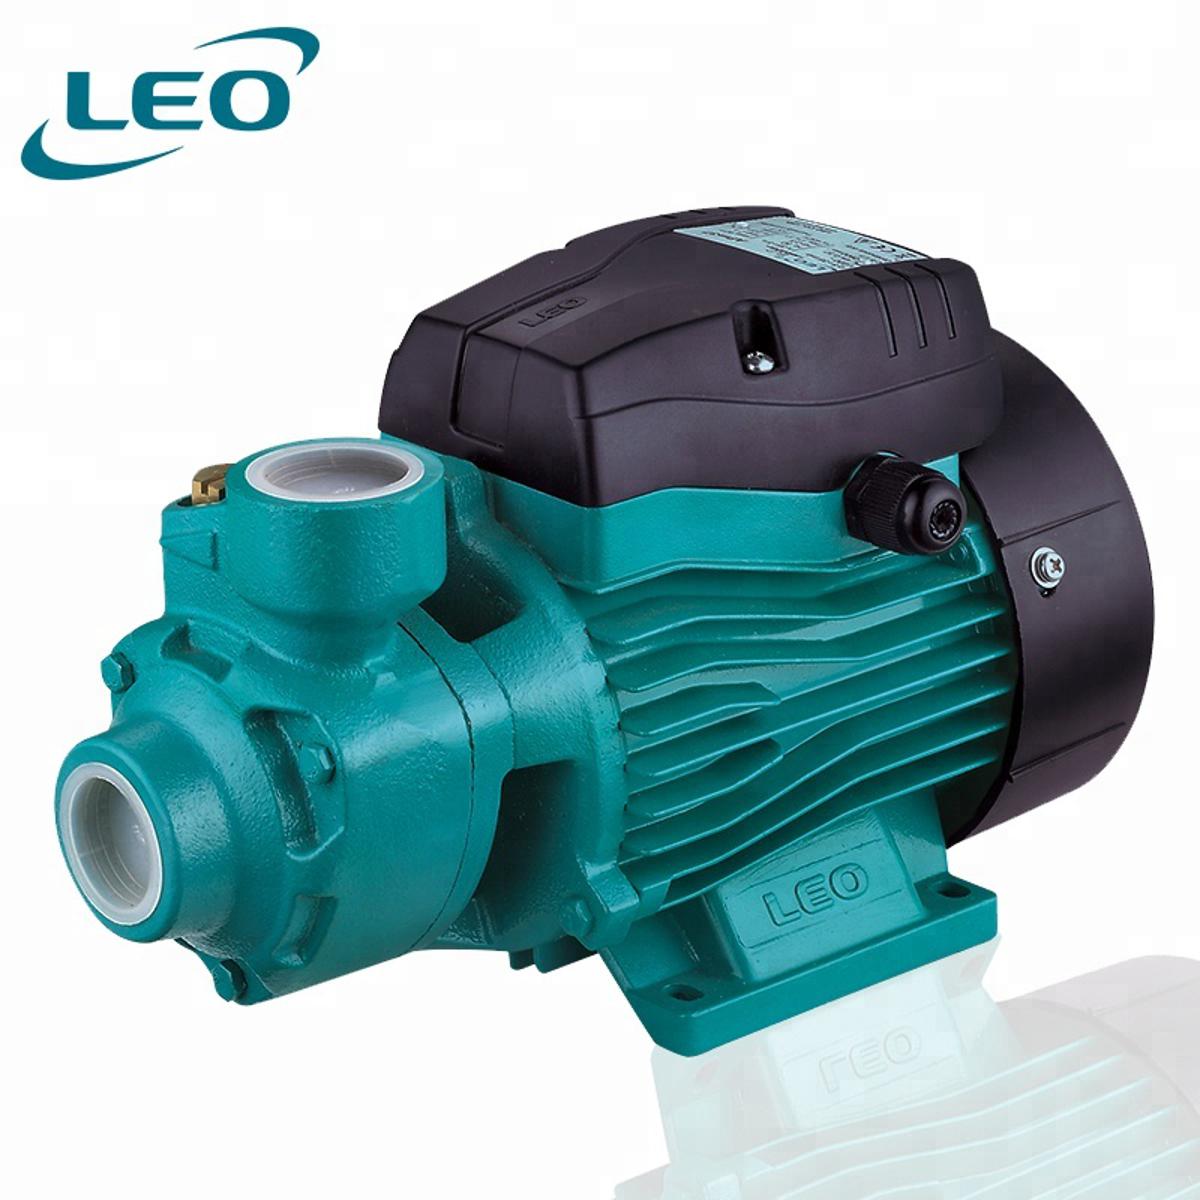 LEO - APM-60 - 600 W - 0.8 HP Clean Water PERIPHERAL - VORTEX Pump- 180V~220V SINGLE PHASE- European STANDARD